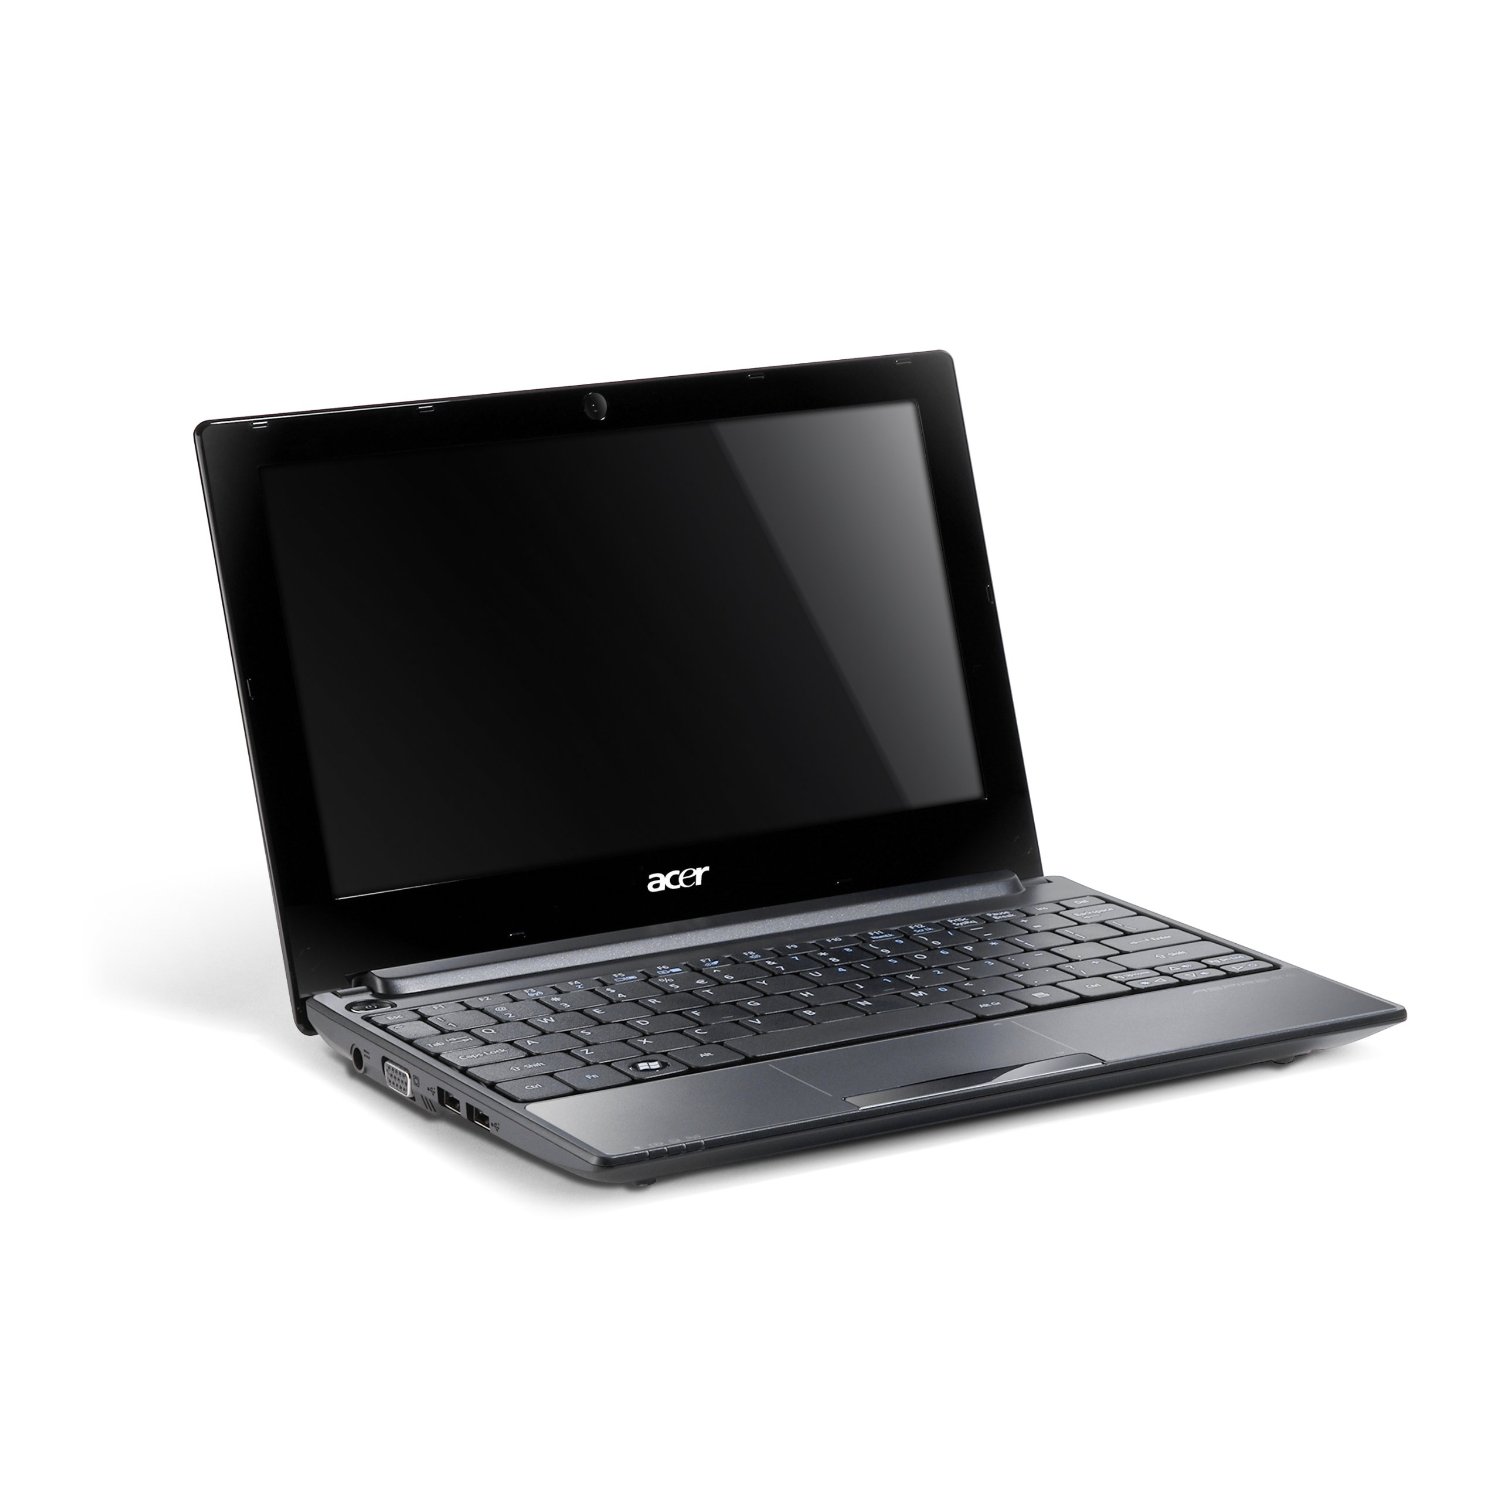 Netbook Acer Aspire One AOD255E-13639 |Harga dan Spesifikasi Laptop ...